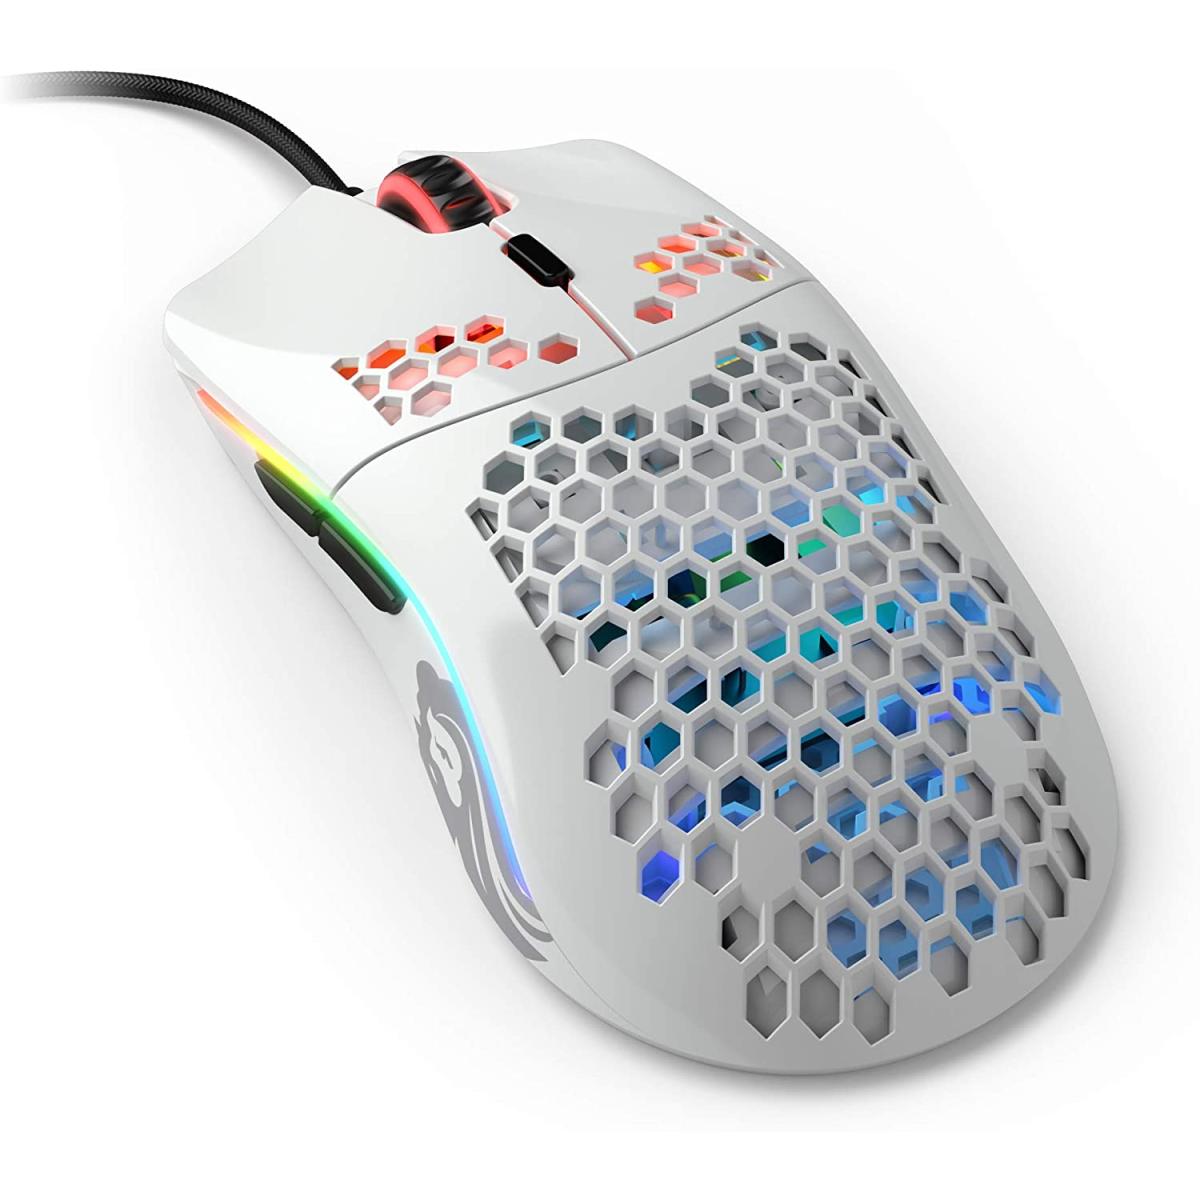 Glorious Model O Glossy White Gaming Mouse 12000dpi Pixart 3360 Optical Sensor Rgb 69g 4362